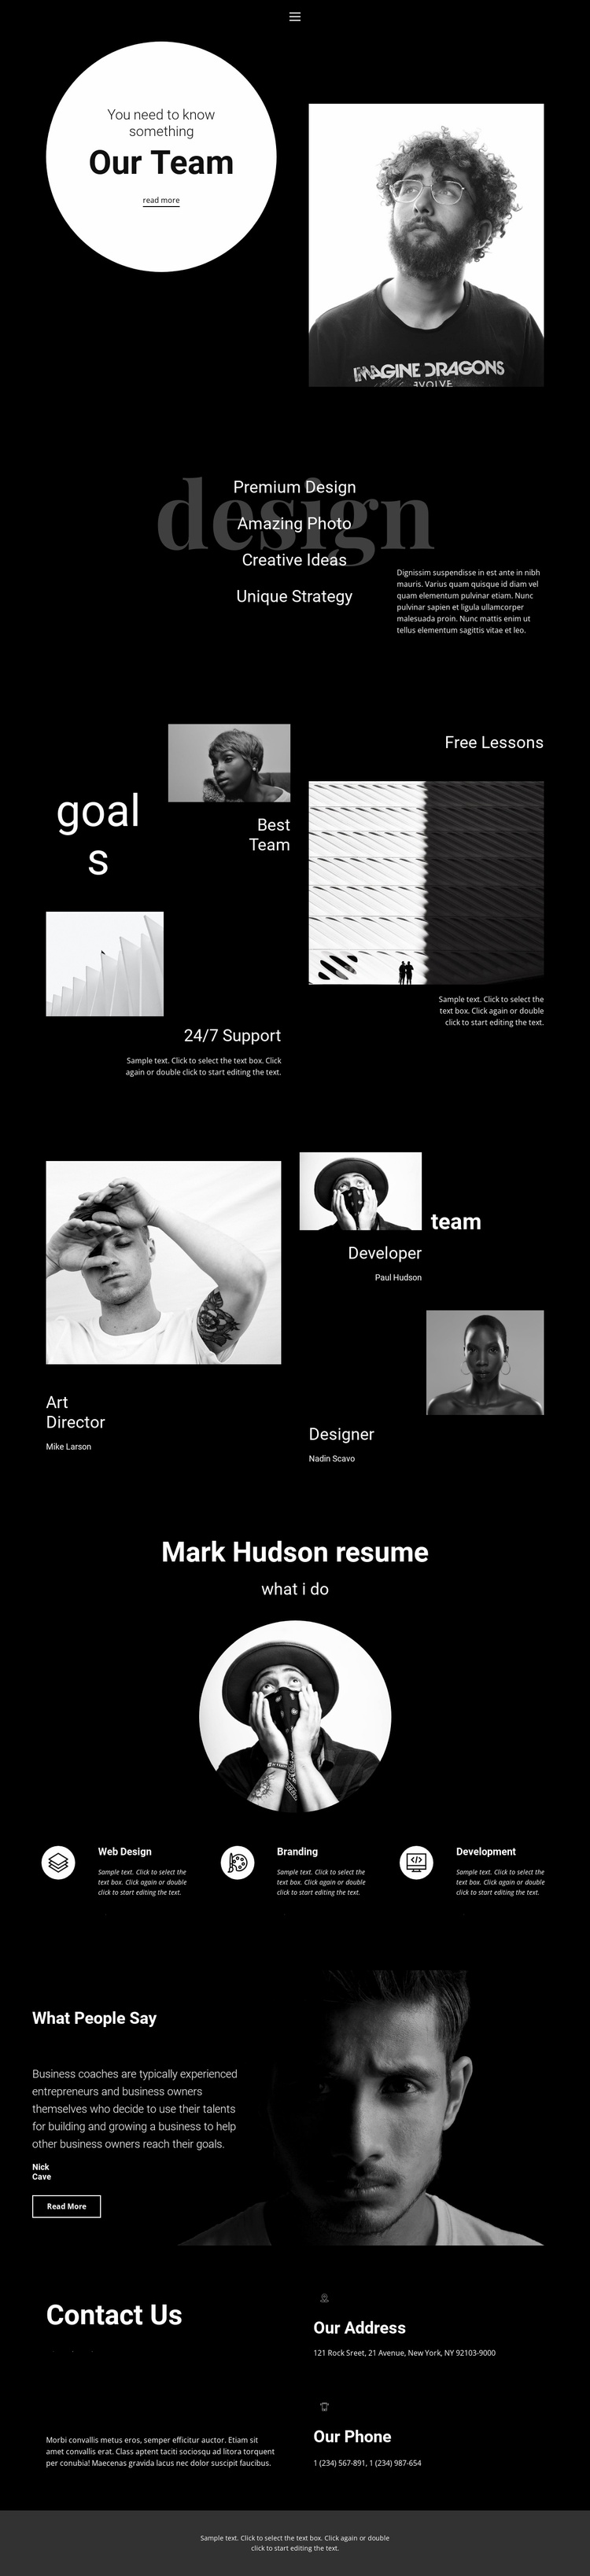 Design and development team Website Template